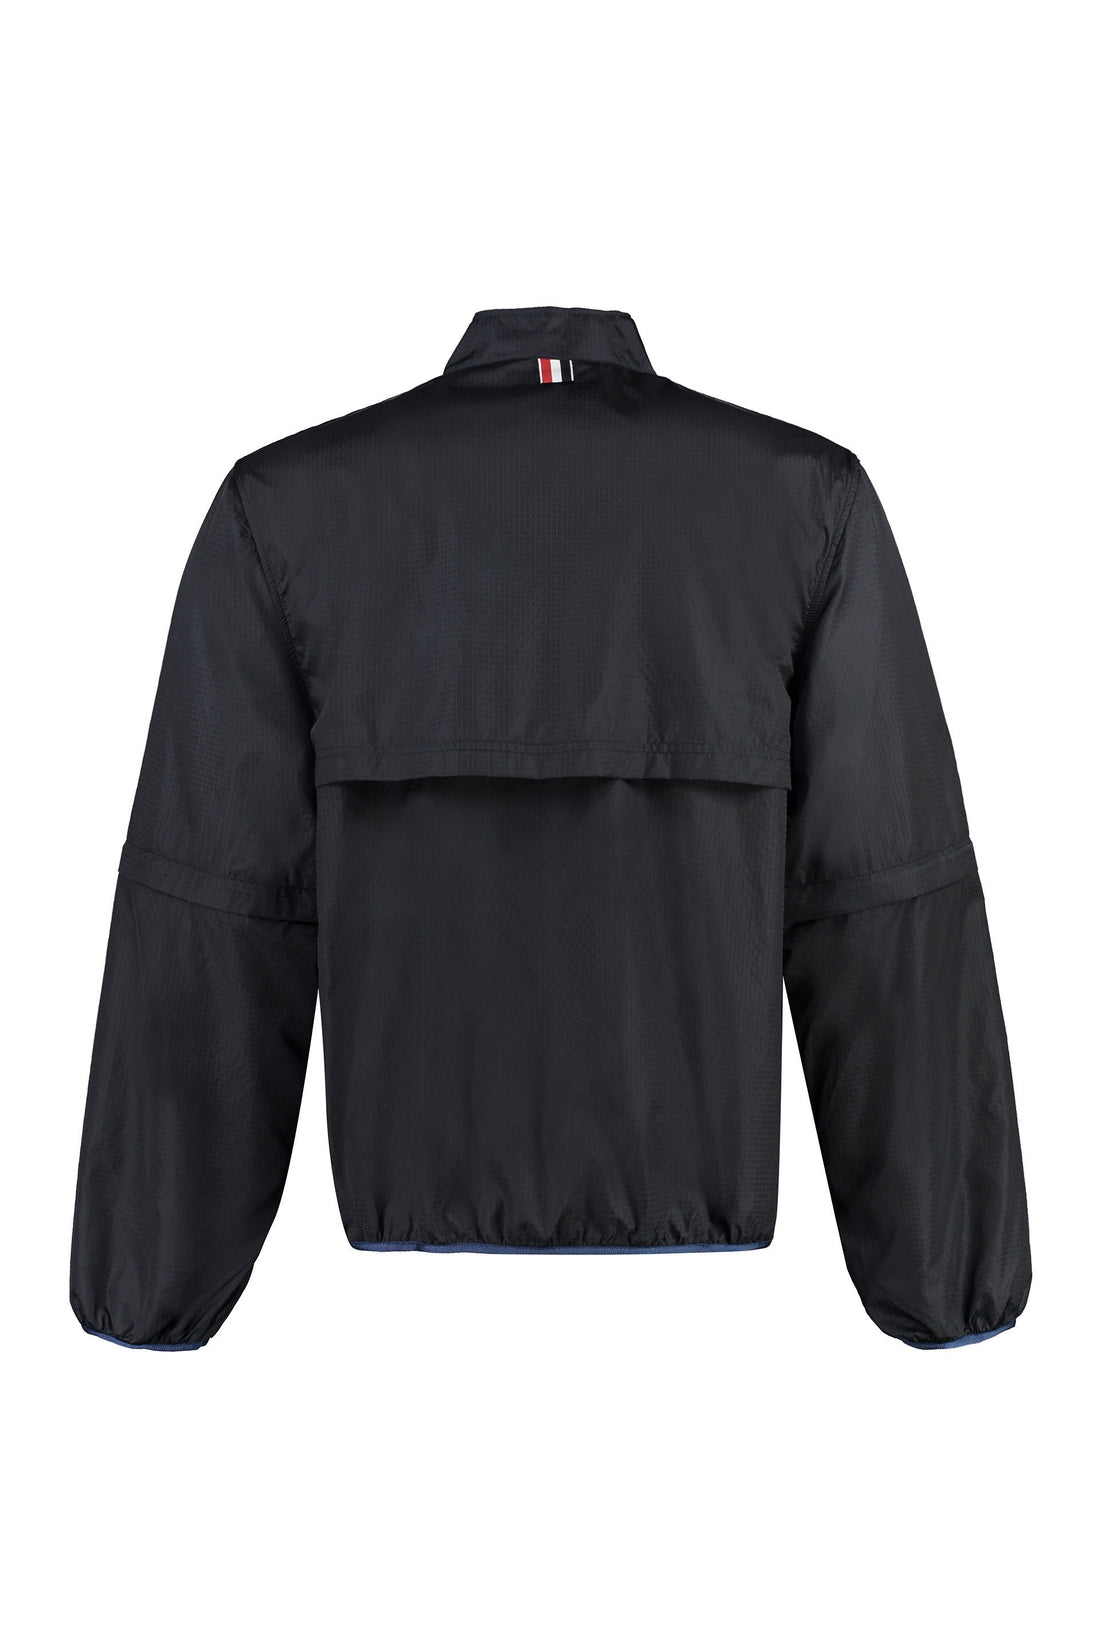 Thom Browne-OUTLET-SALE-Nylon jacket-ARCHIVIST